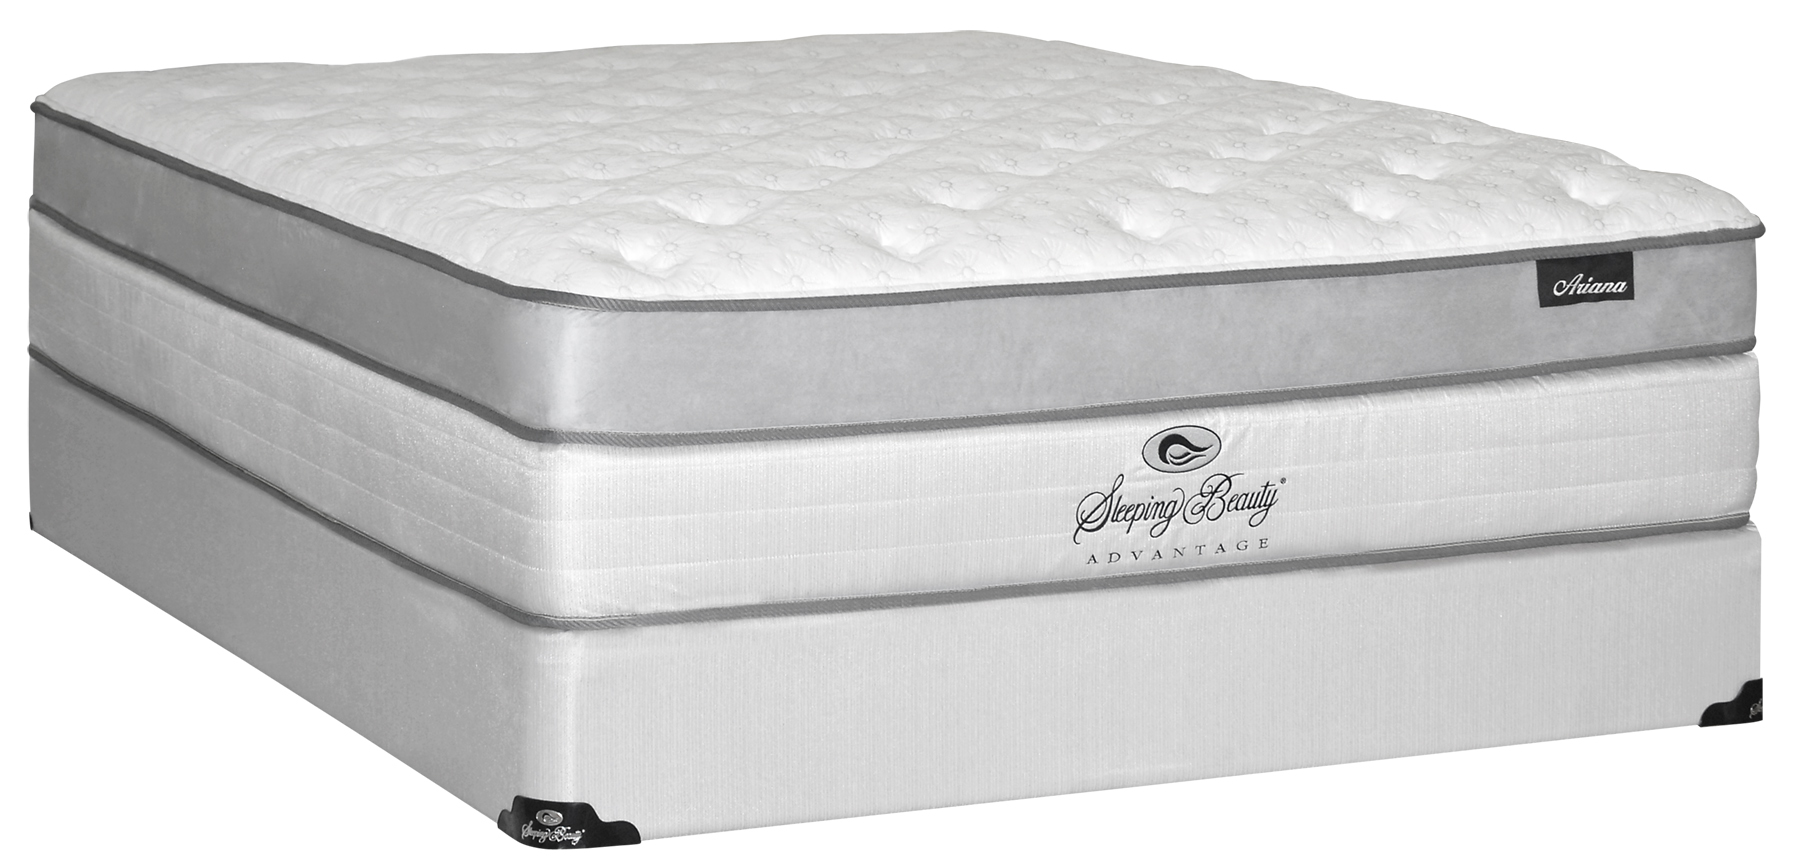 sleeping beauty advantage ariana mattress